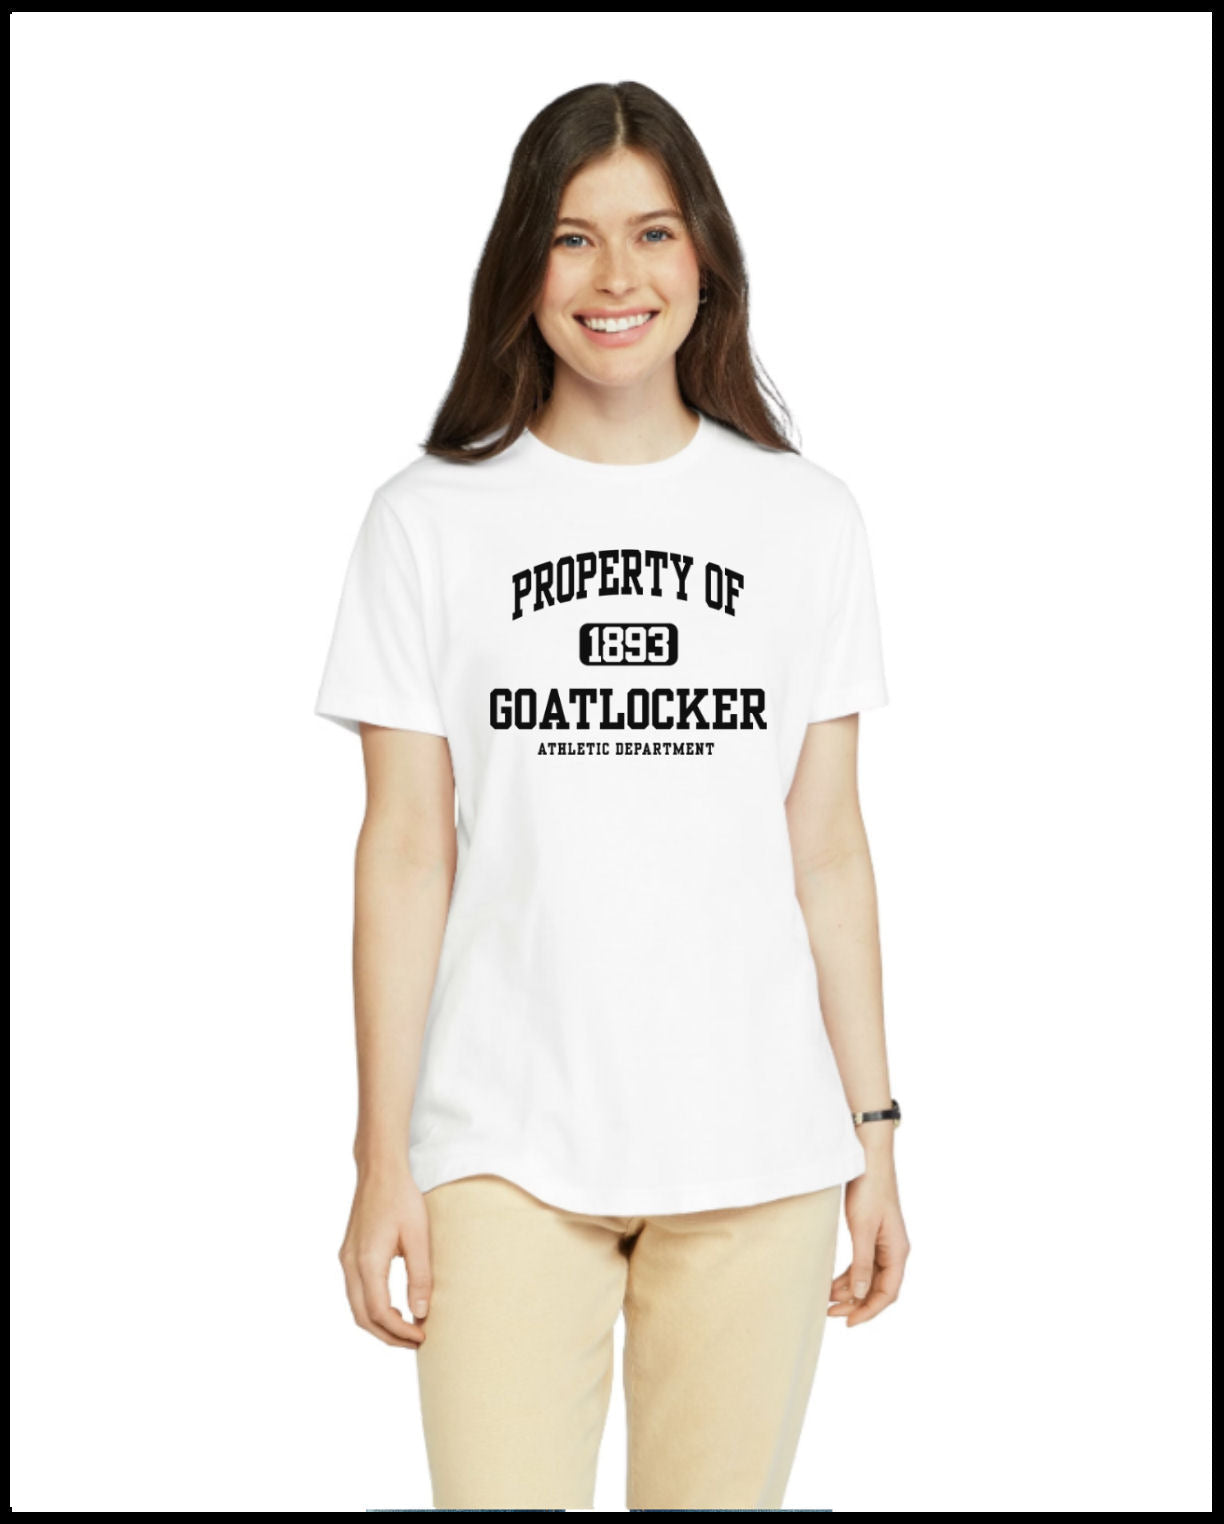 Property of Goat Locker 1893 White & Black T-Shirt Dry Fit Athletic